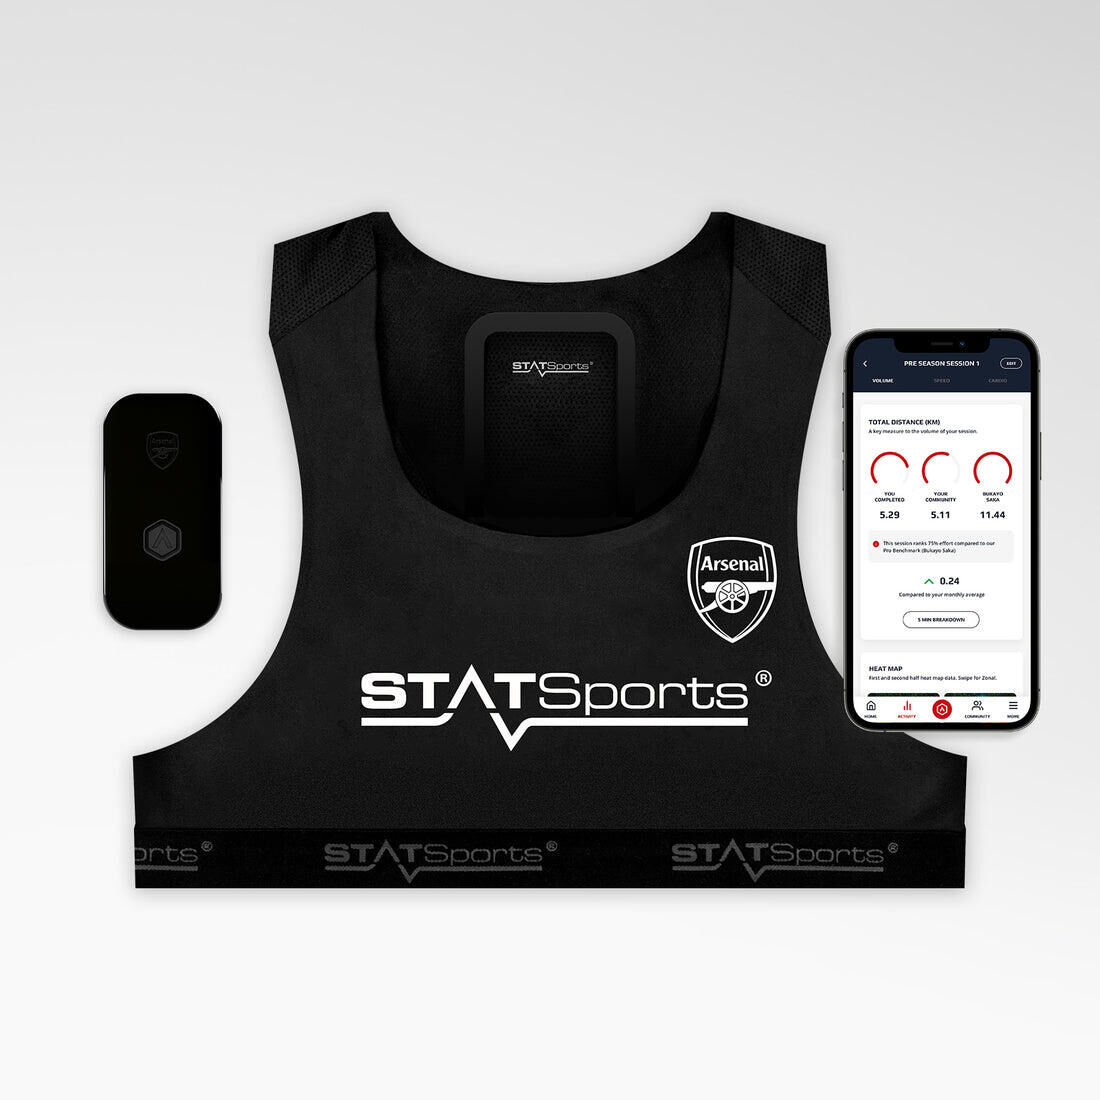 STATSPORTS STATSports Adult Arsenal FC Edition GPS Performance Tracker